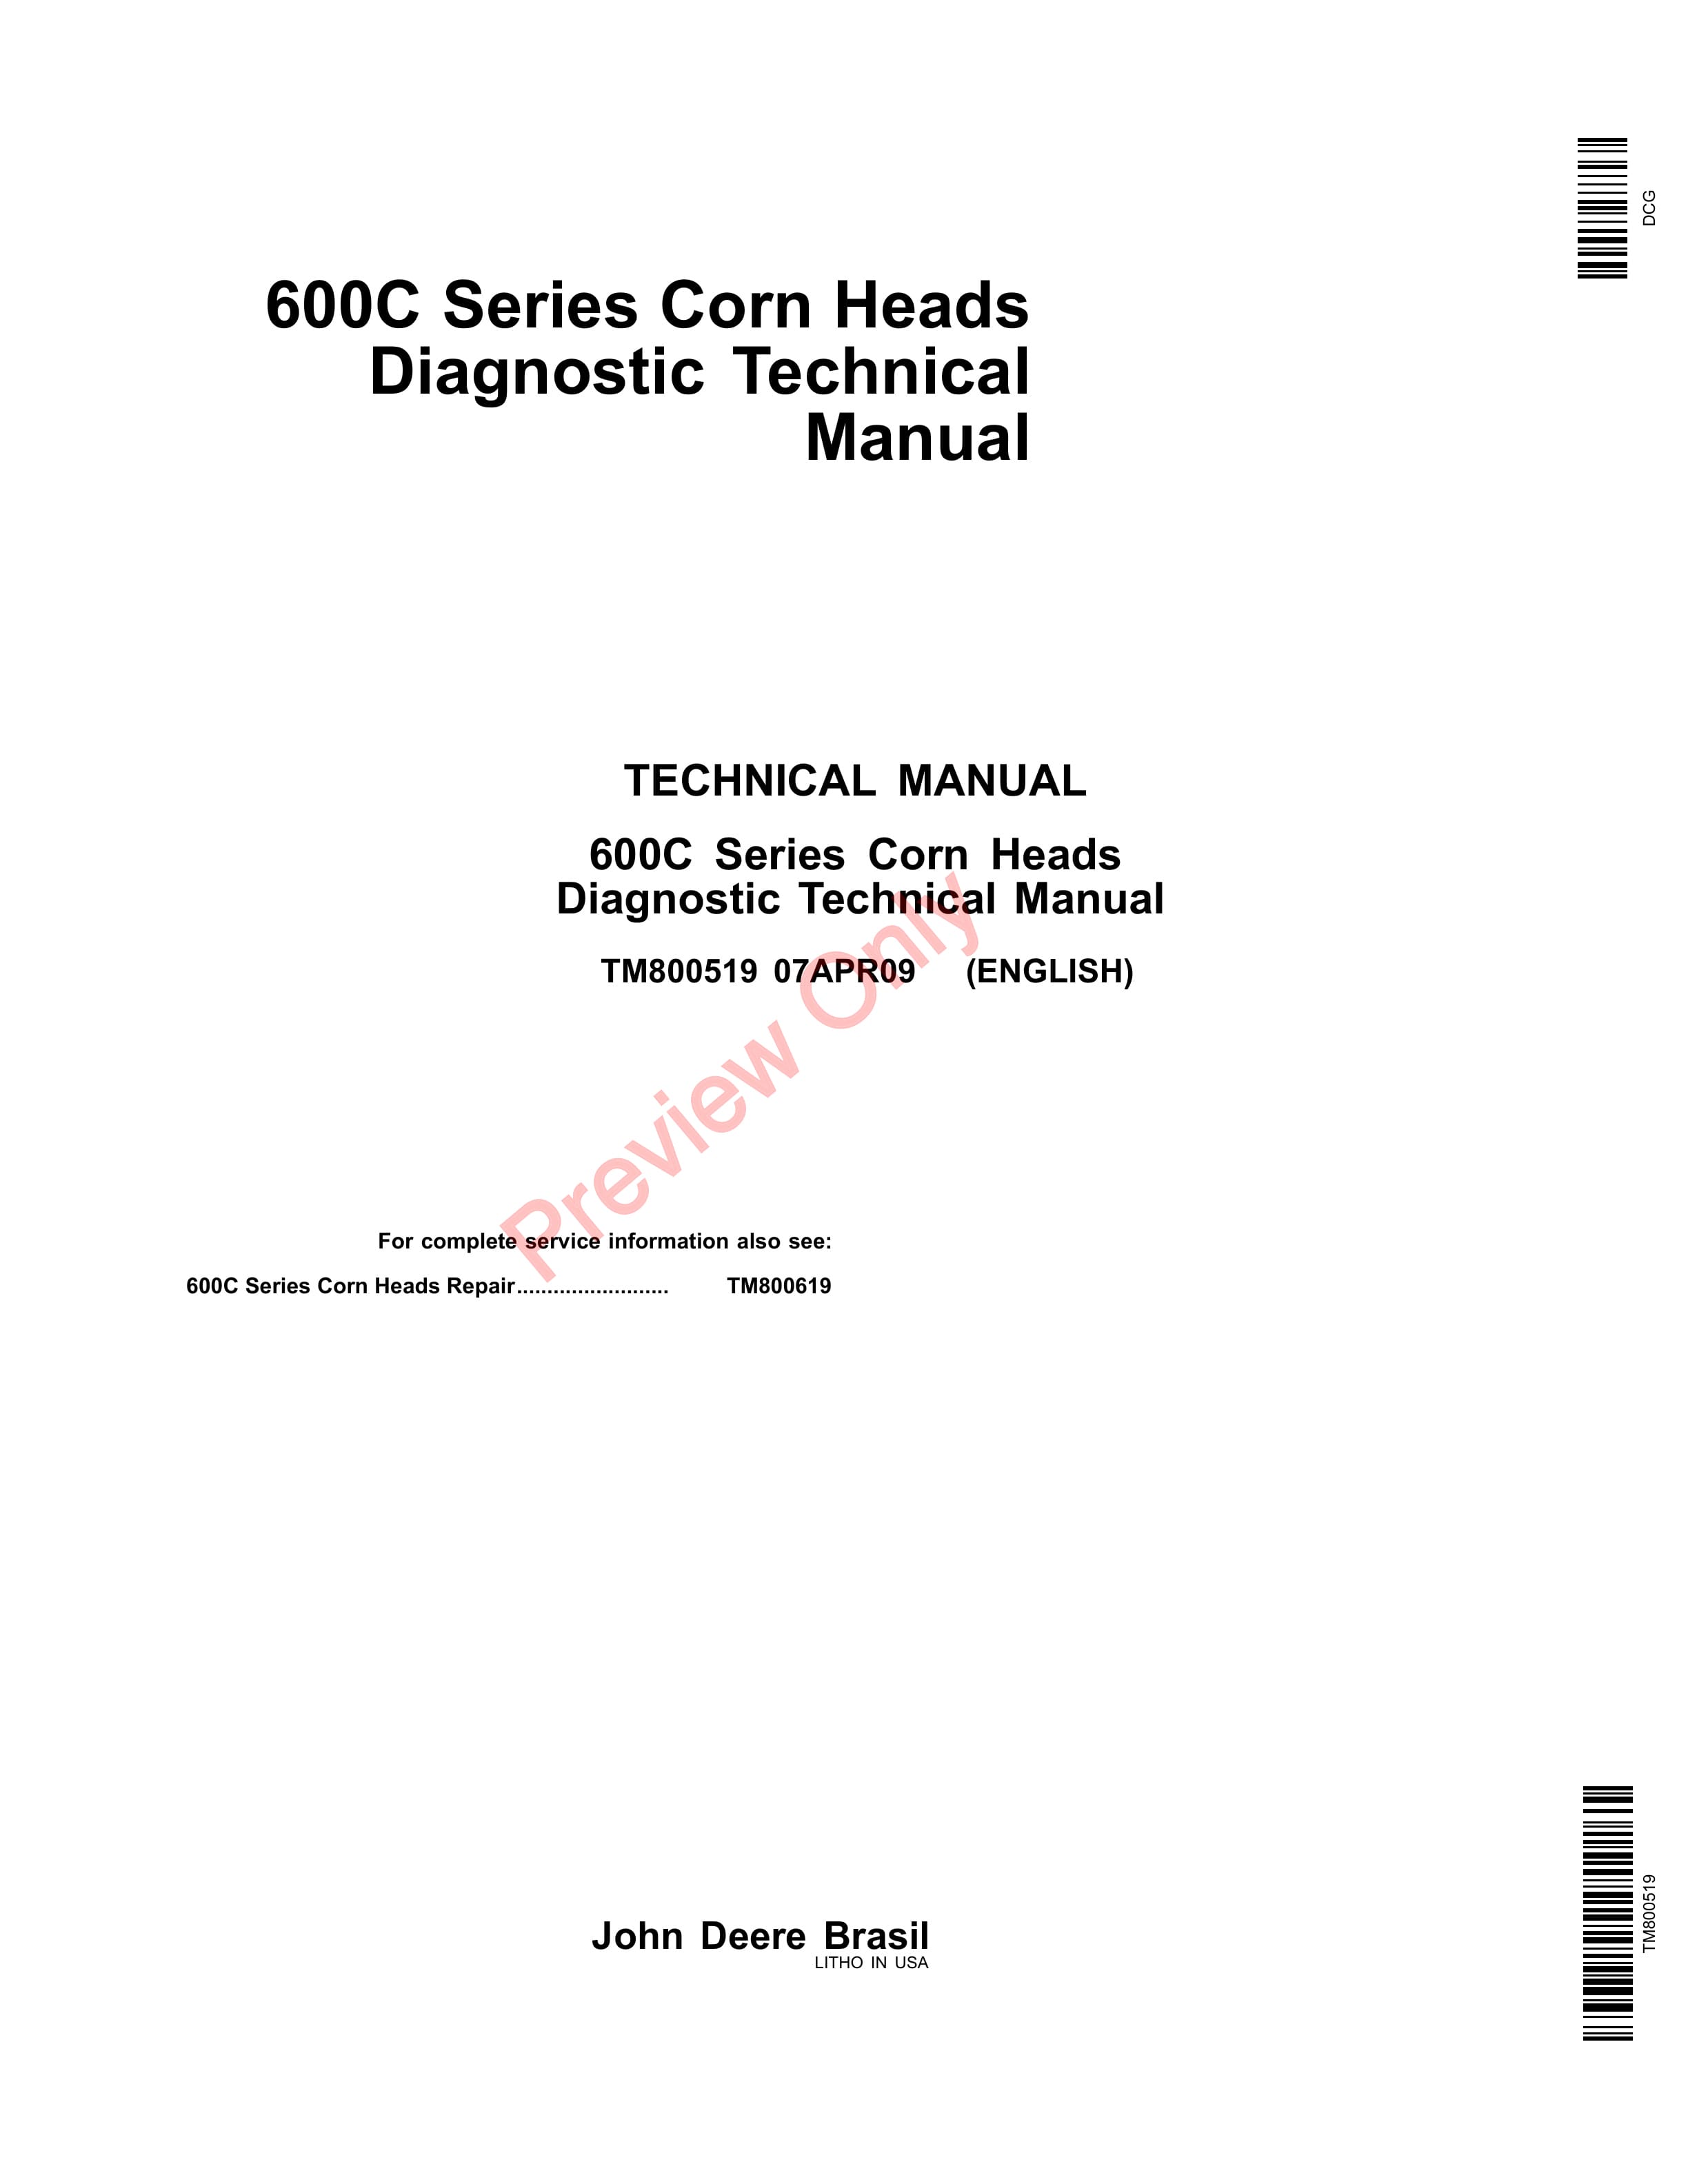 John Deere 600C Series Corn Head Technical Manual TM800519 07APR09 1